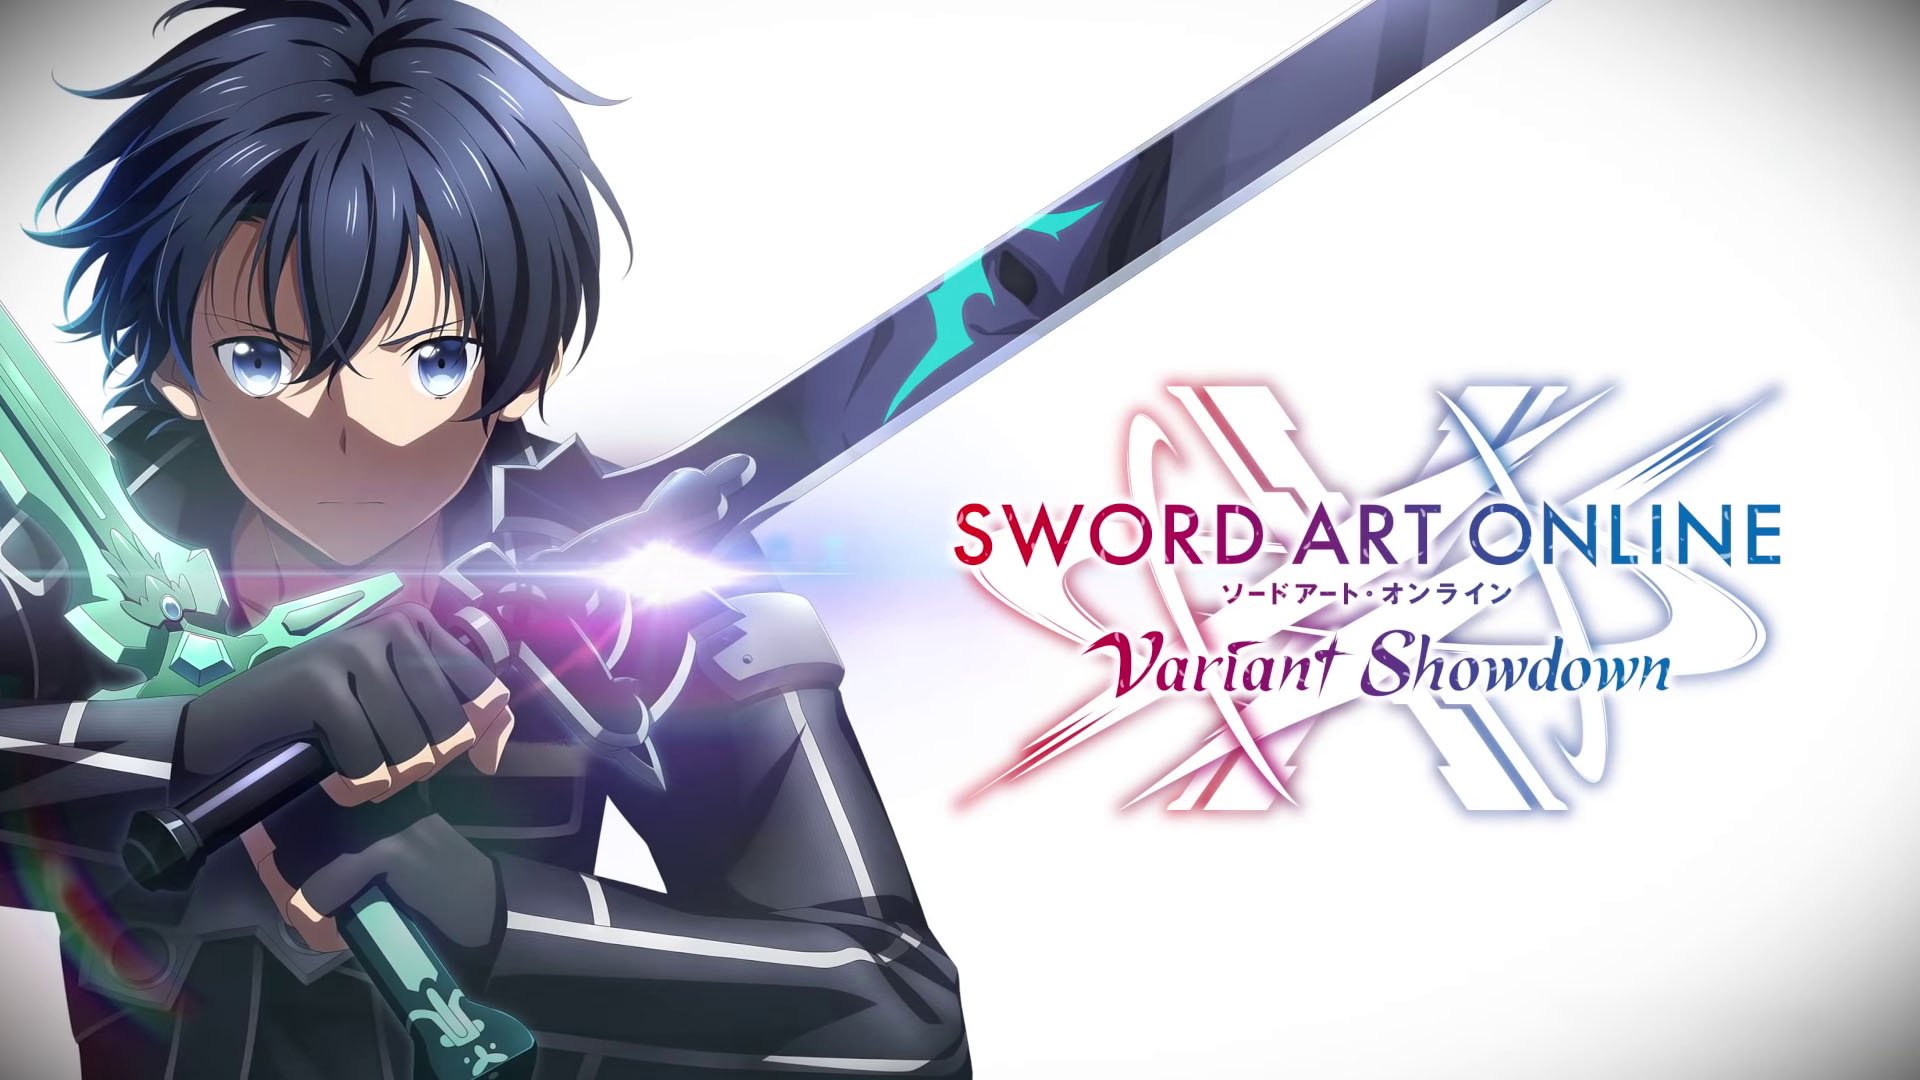 10th anniversary game Sword Art Online Variant Showdown announced